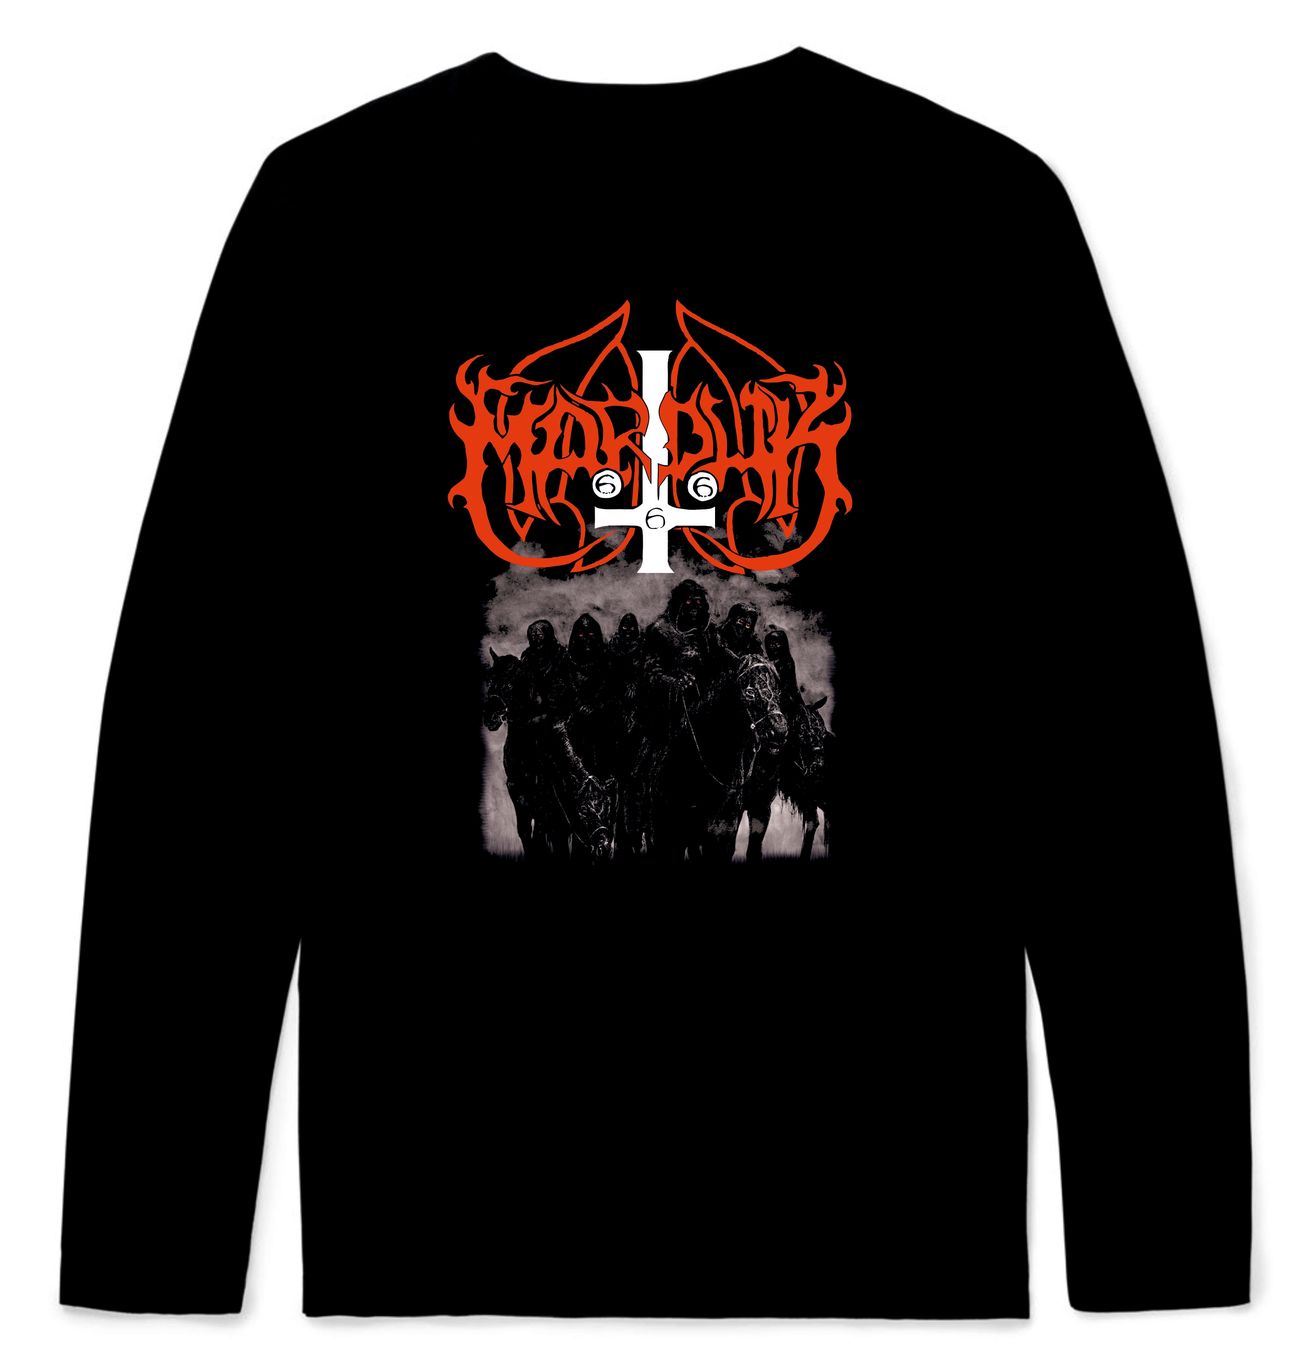 Marduk Unlight Longsleeve T-Shirt – Metal & Rock T-shirts and Accessories